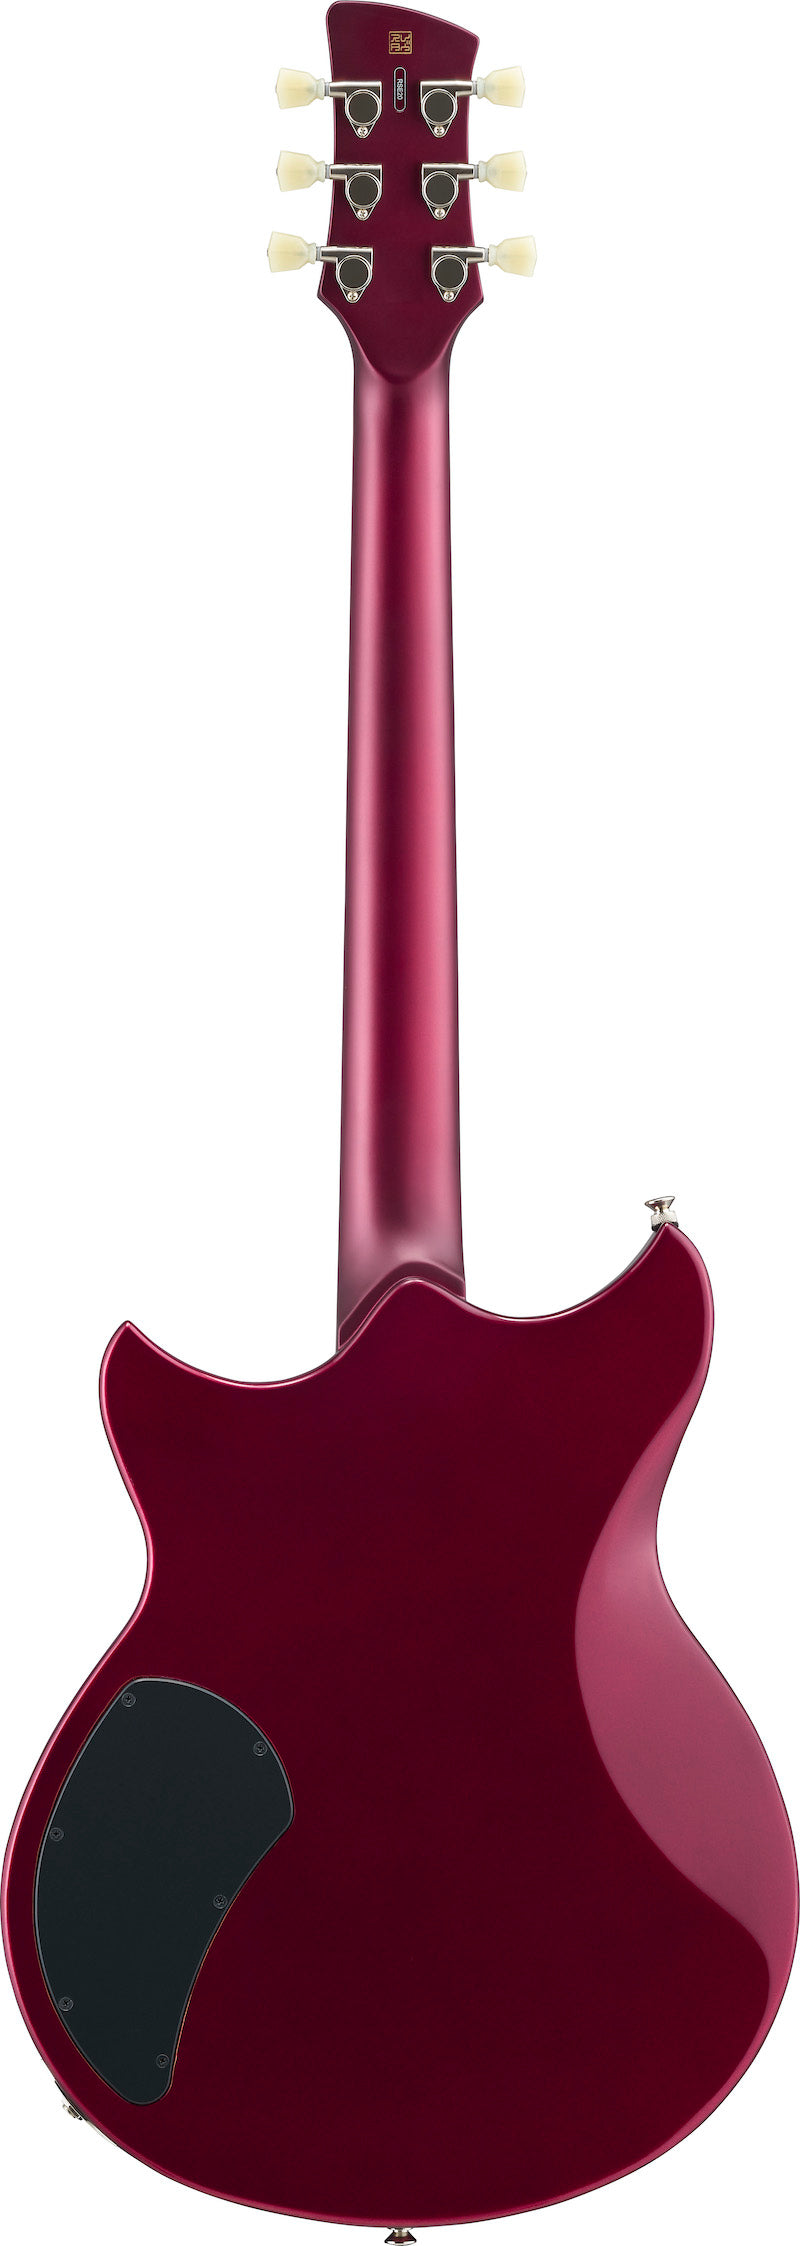 Yamaha Revstar RSE20 RCP Electric Guitar - Red Copper - A Pratte 